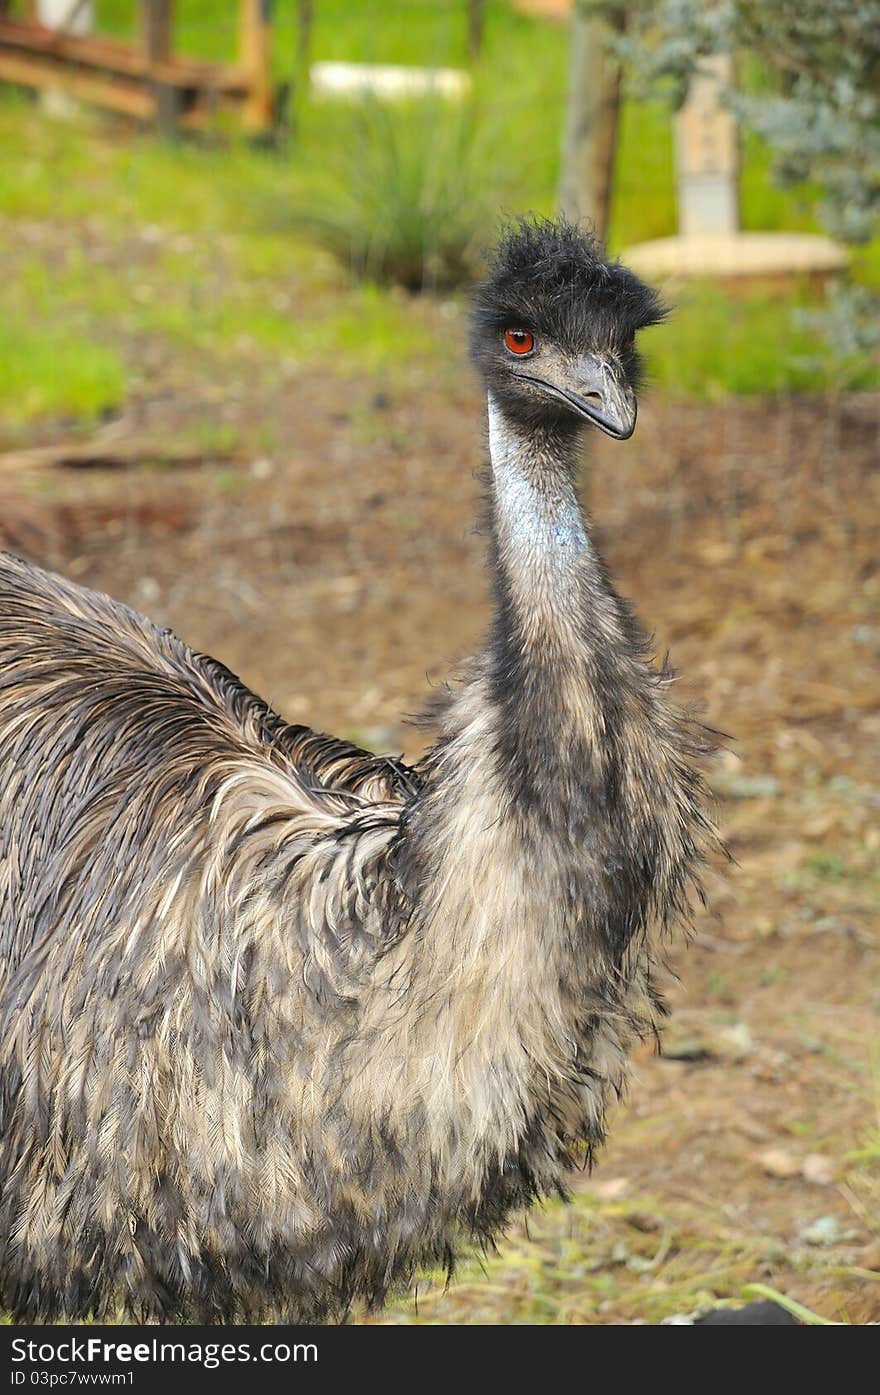 Big emu bird in the outskirts of Perth, Australia.